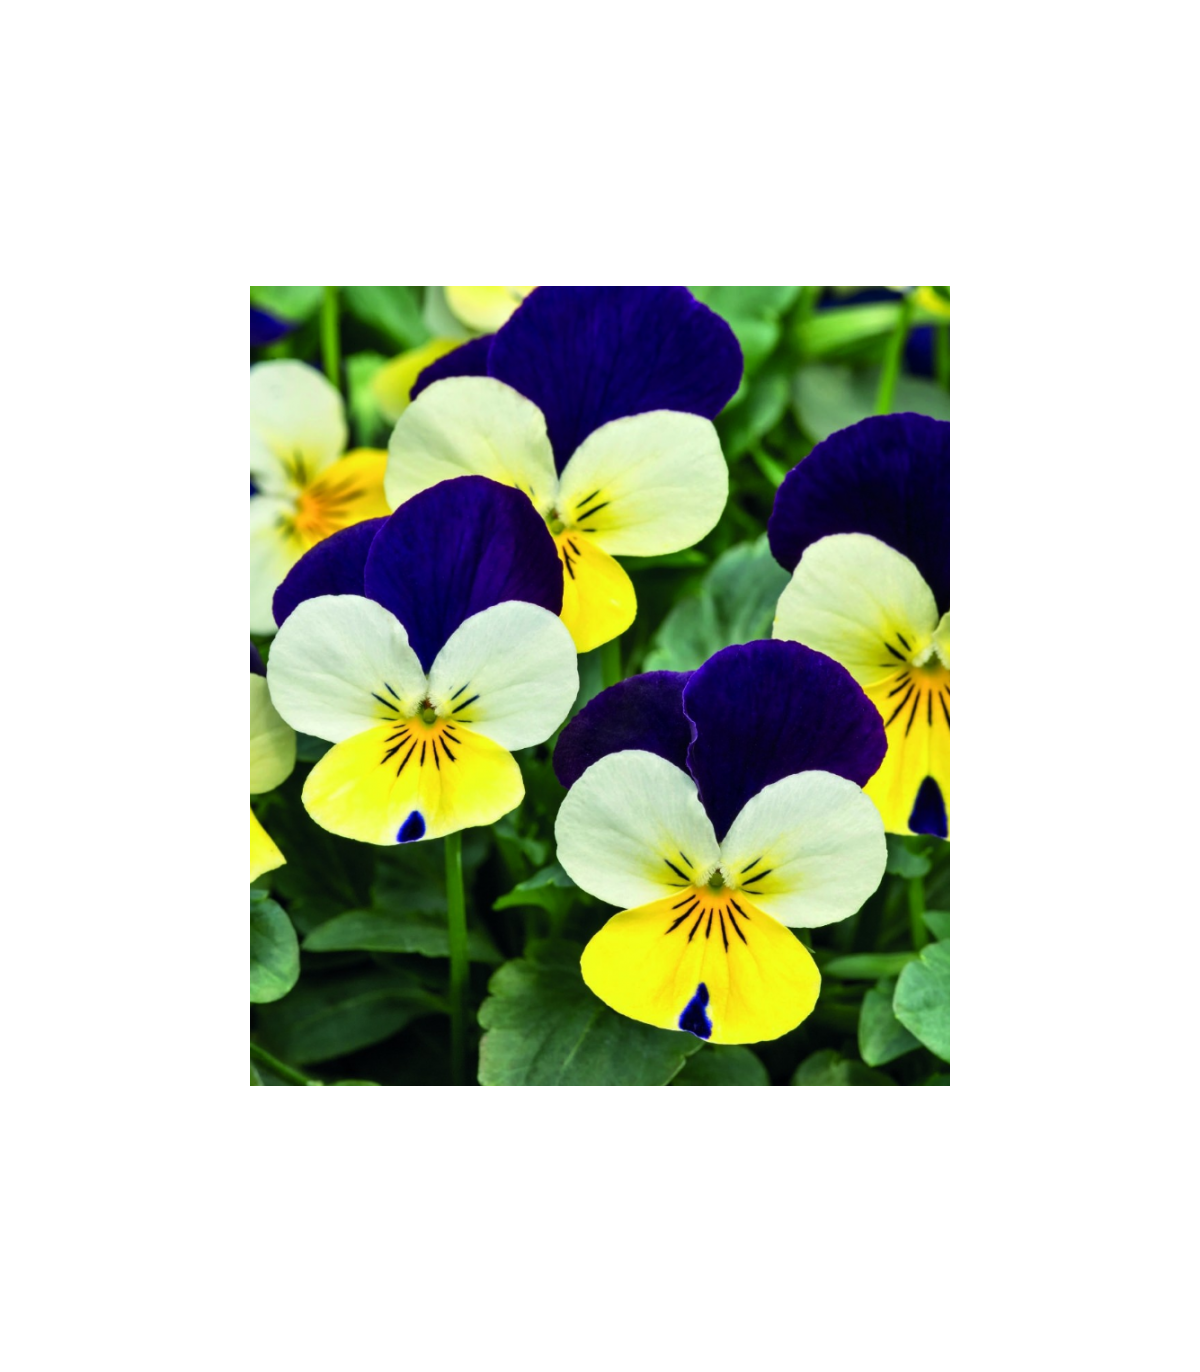 Violka rohatá Lemon Purple Wing - Viola cornuta - osivo violky - 20 ks